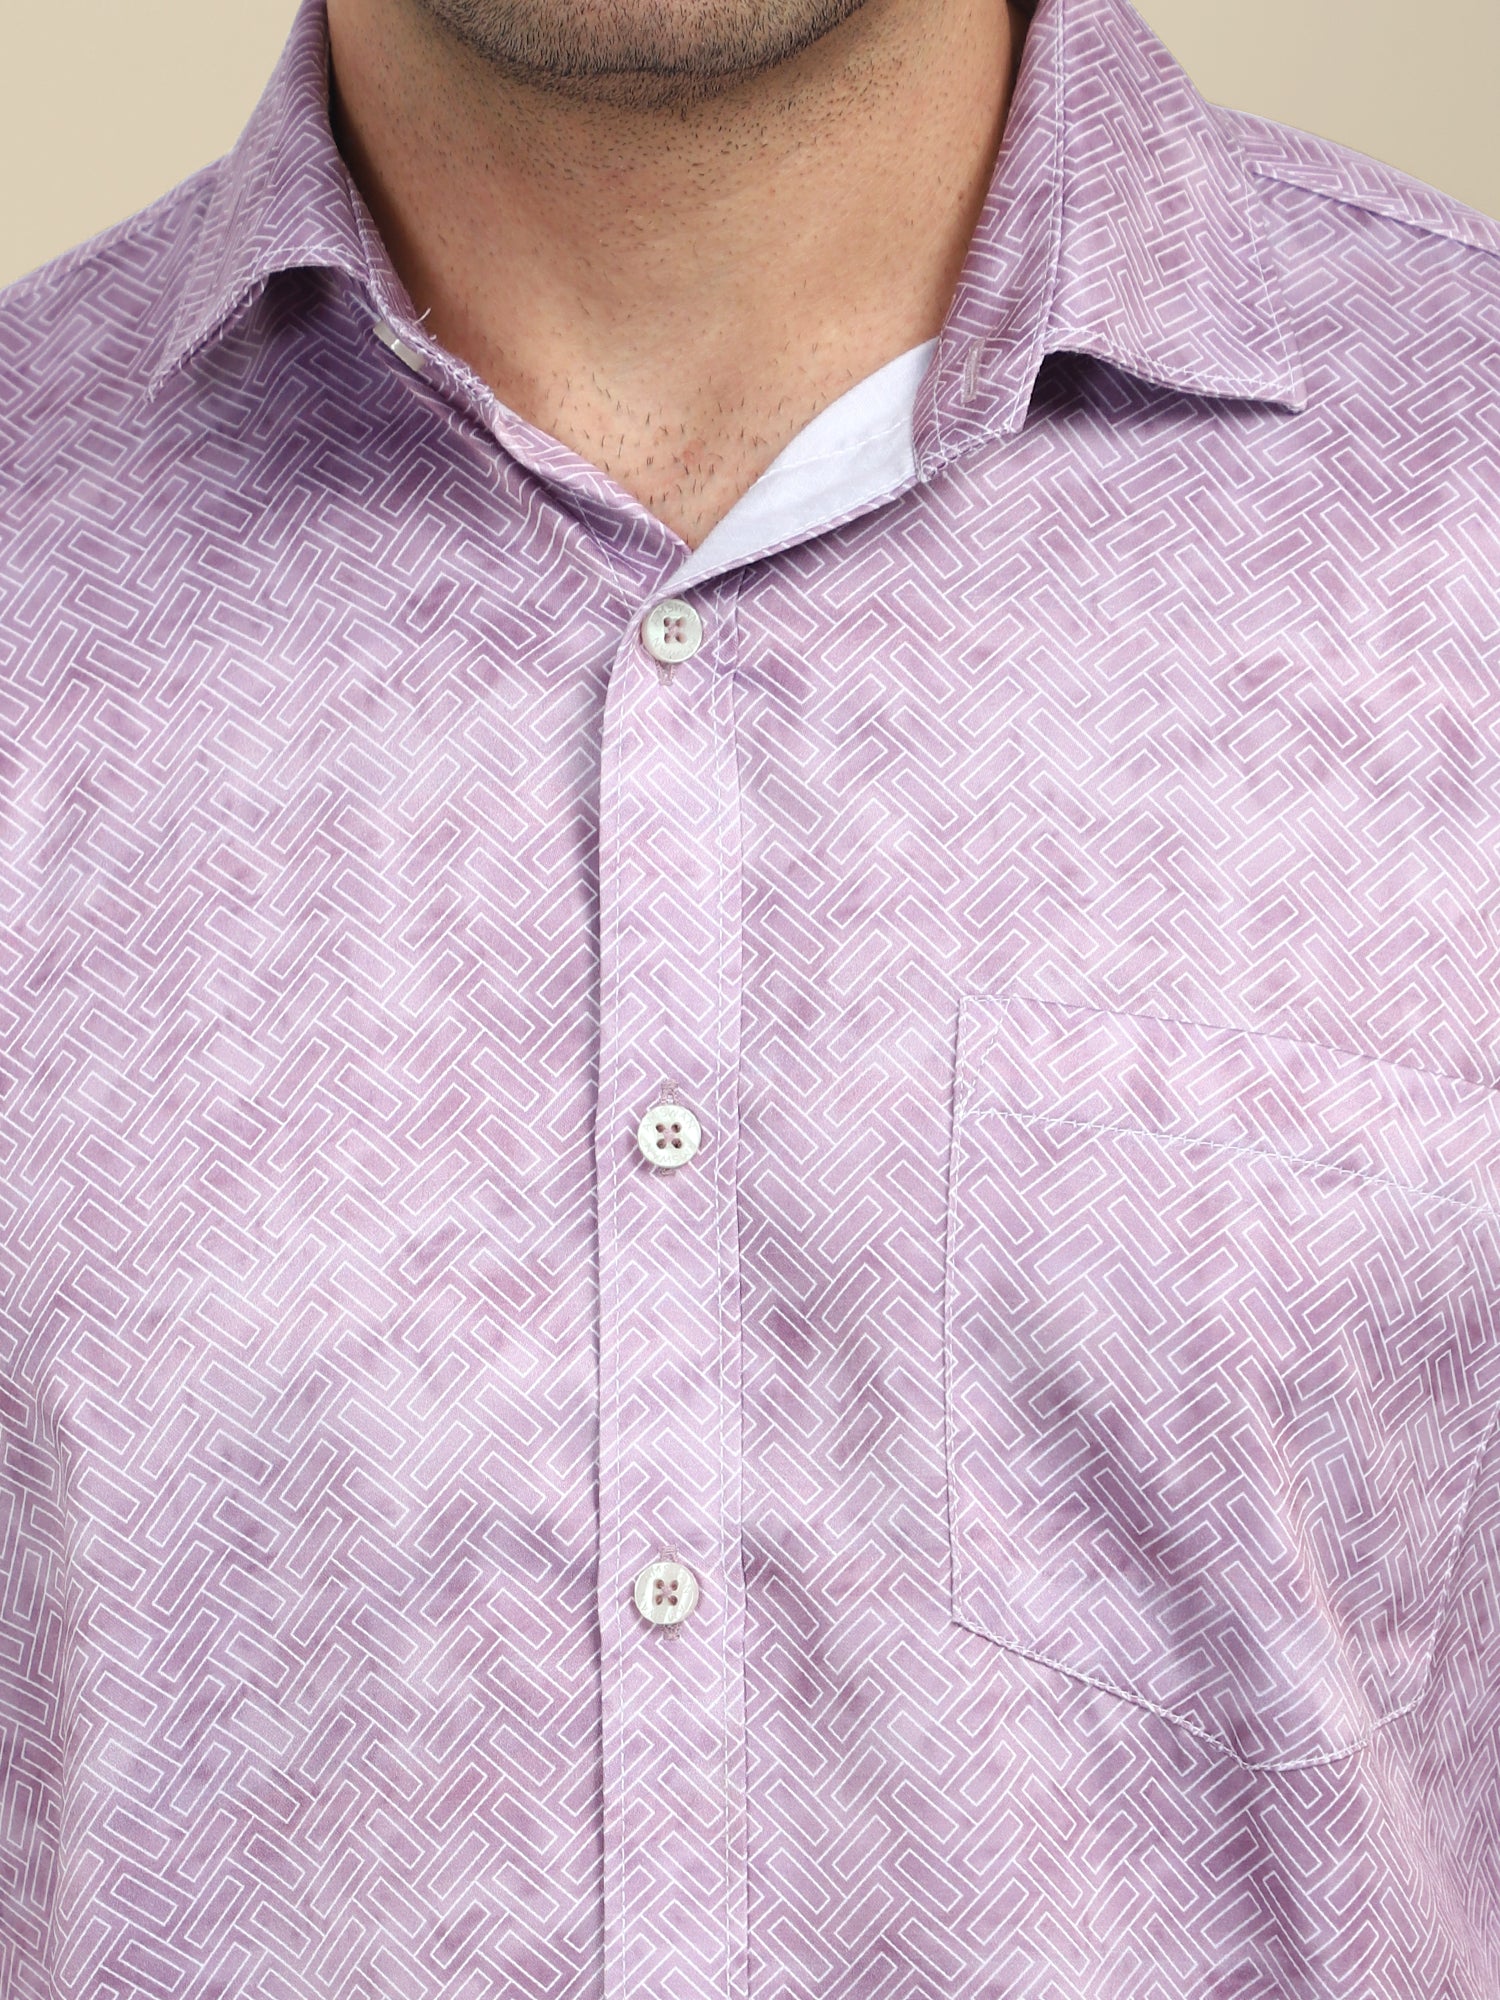 Men's Poly Satin Lycra Purple Digital Printed Shirt